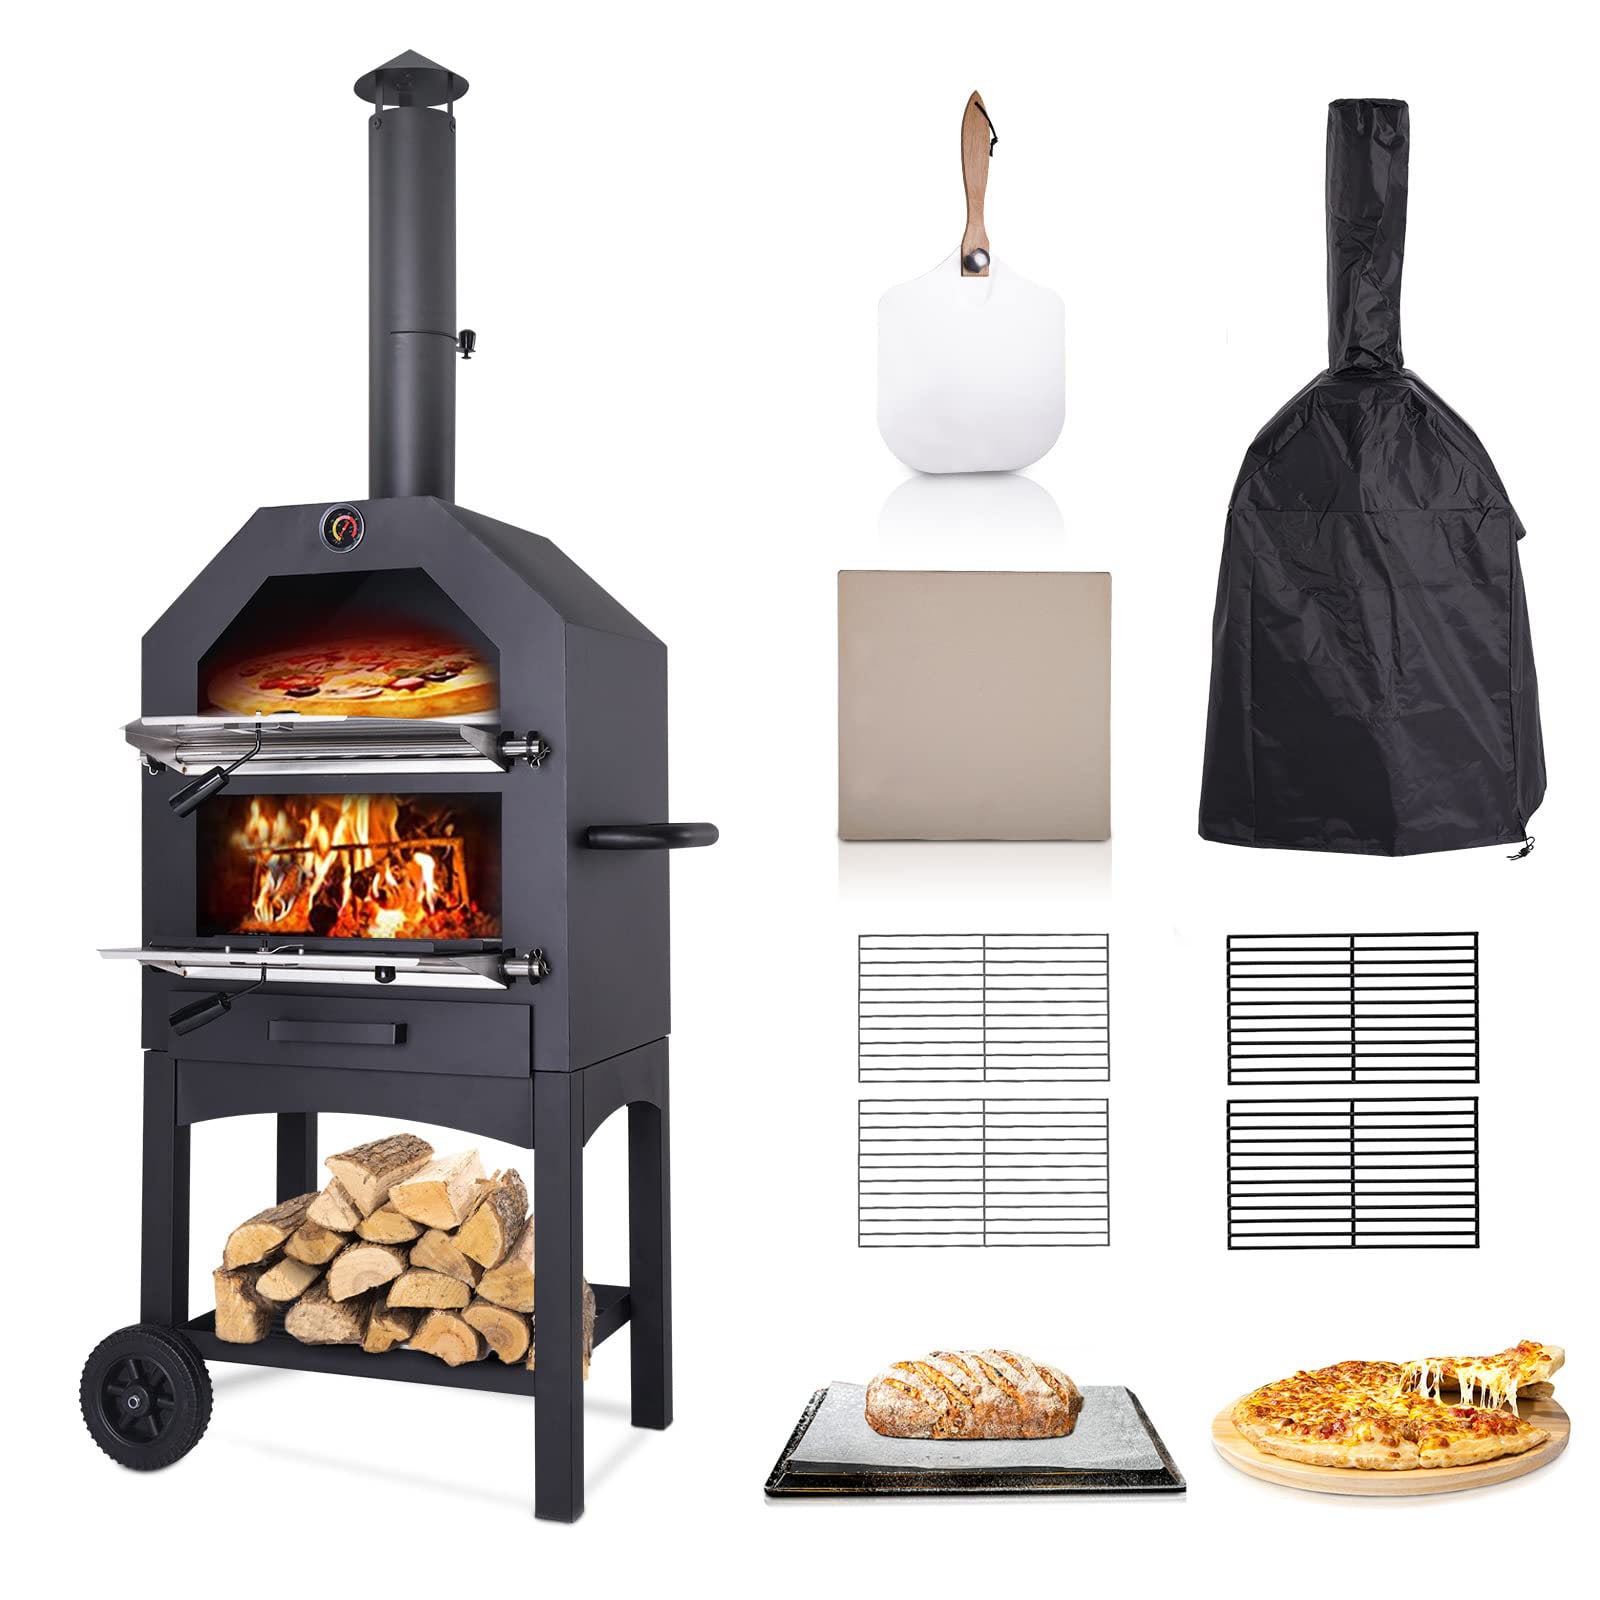 Ninja wood fire oven : r/Pizza